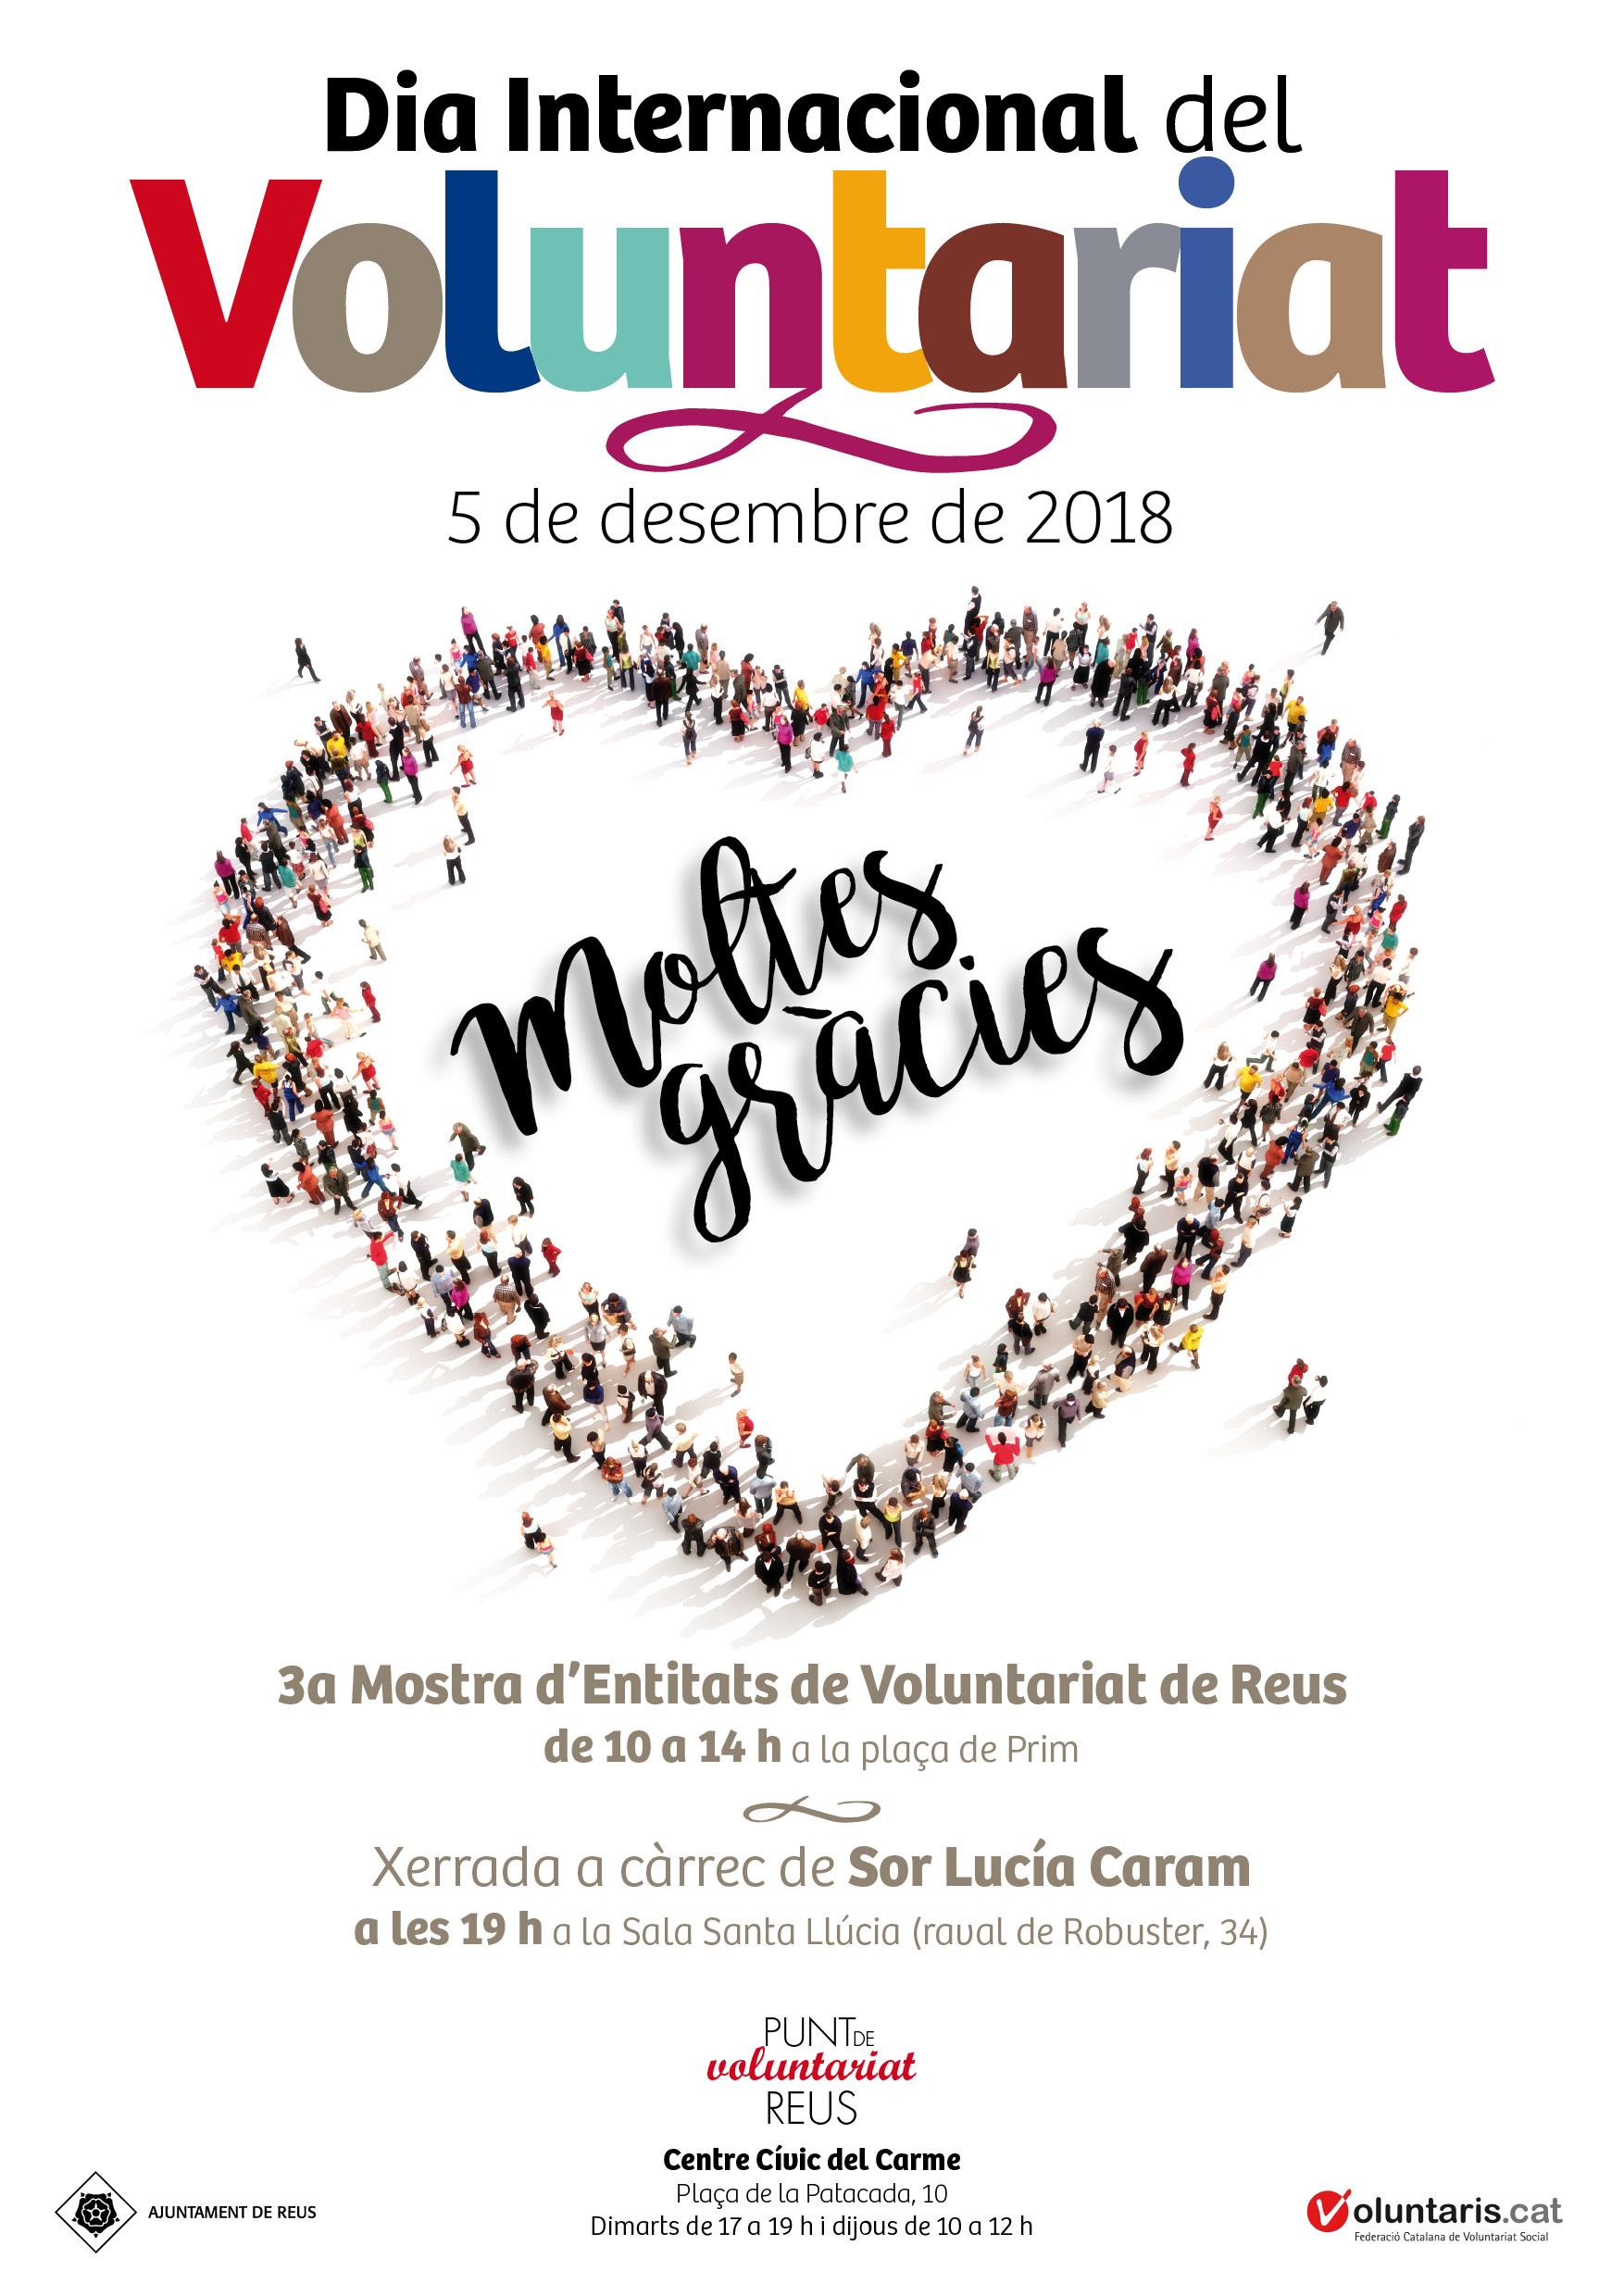 Xerrada de SOR LUCÍA CARAM: “El voluntariat al segle XXI”